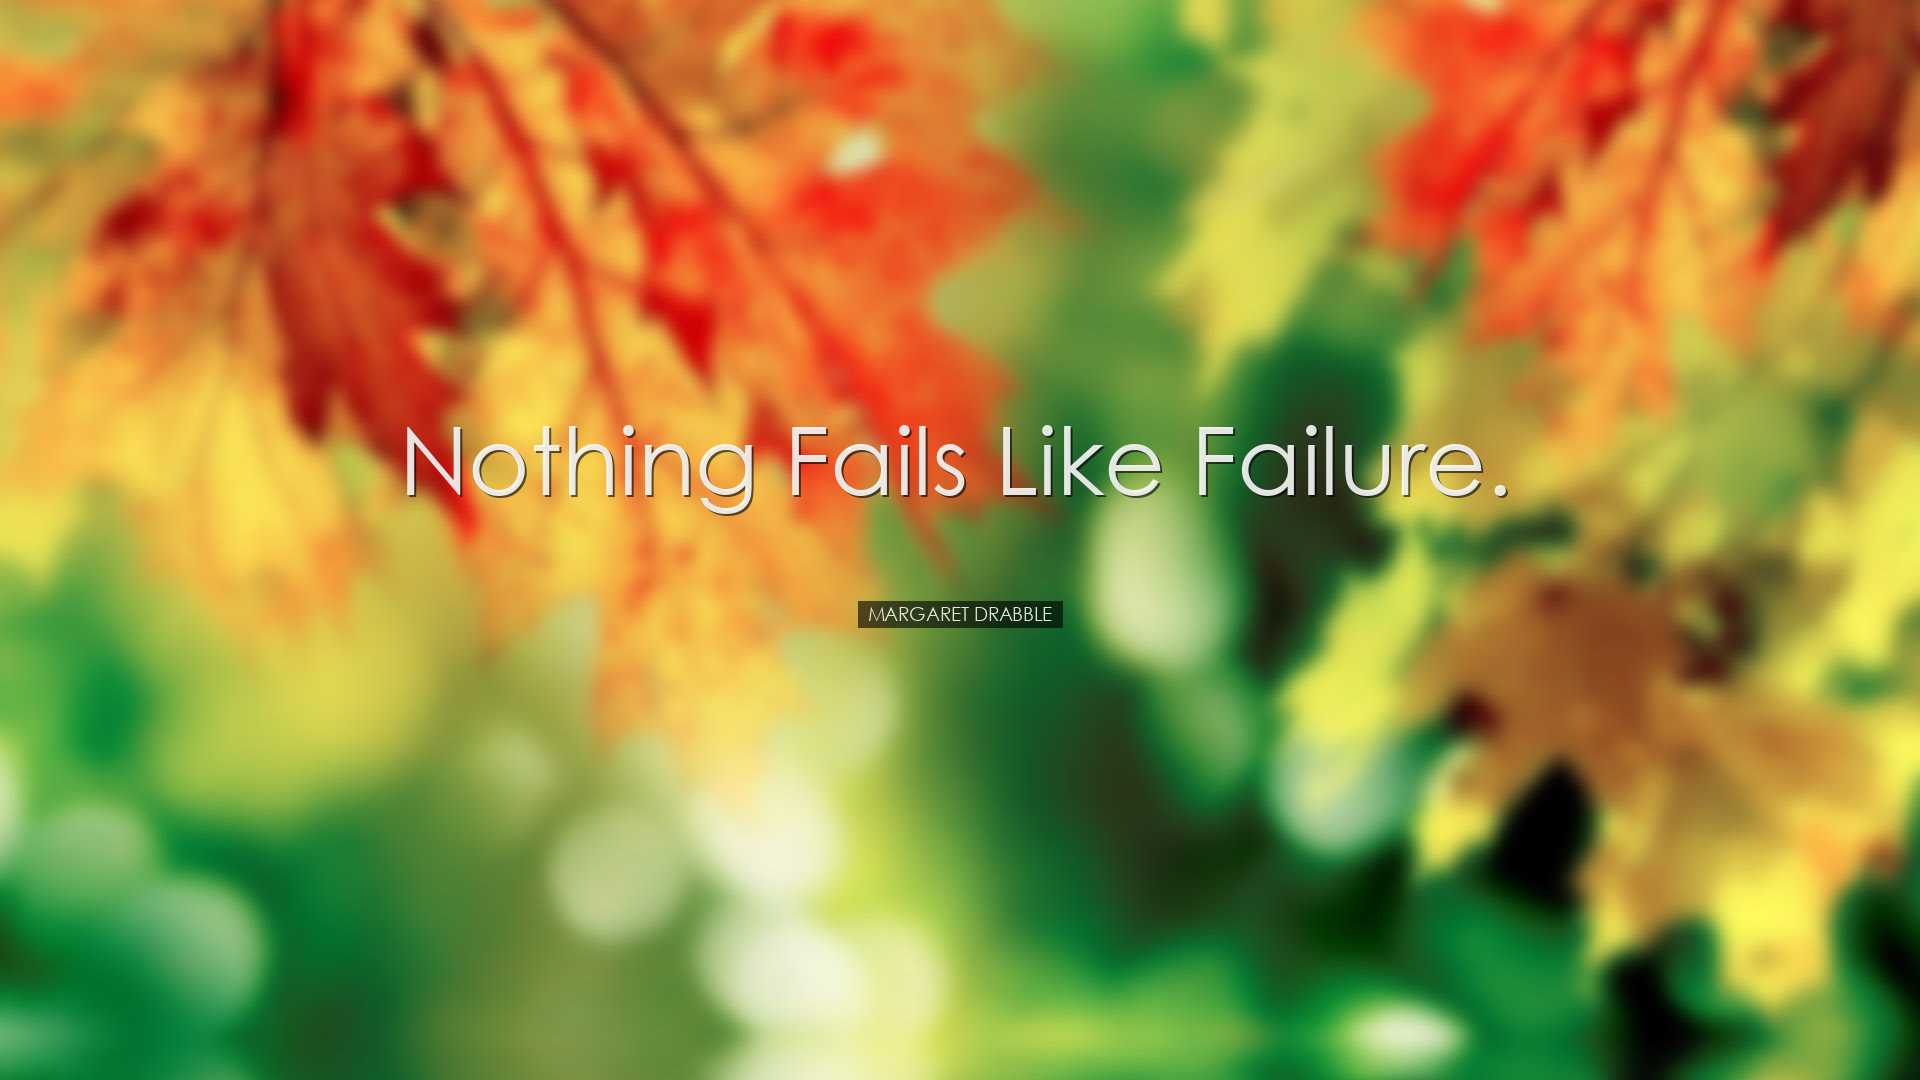 Nothing fails like failure. - Margaret Drabble